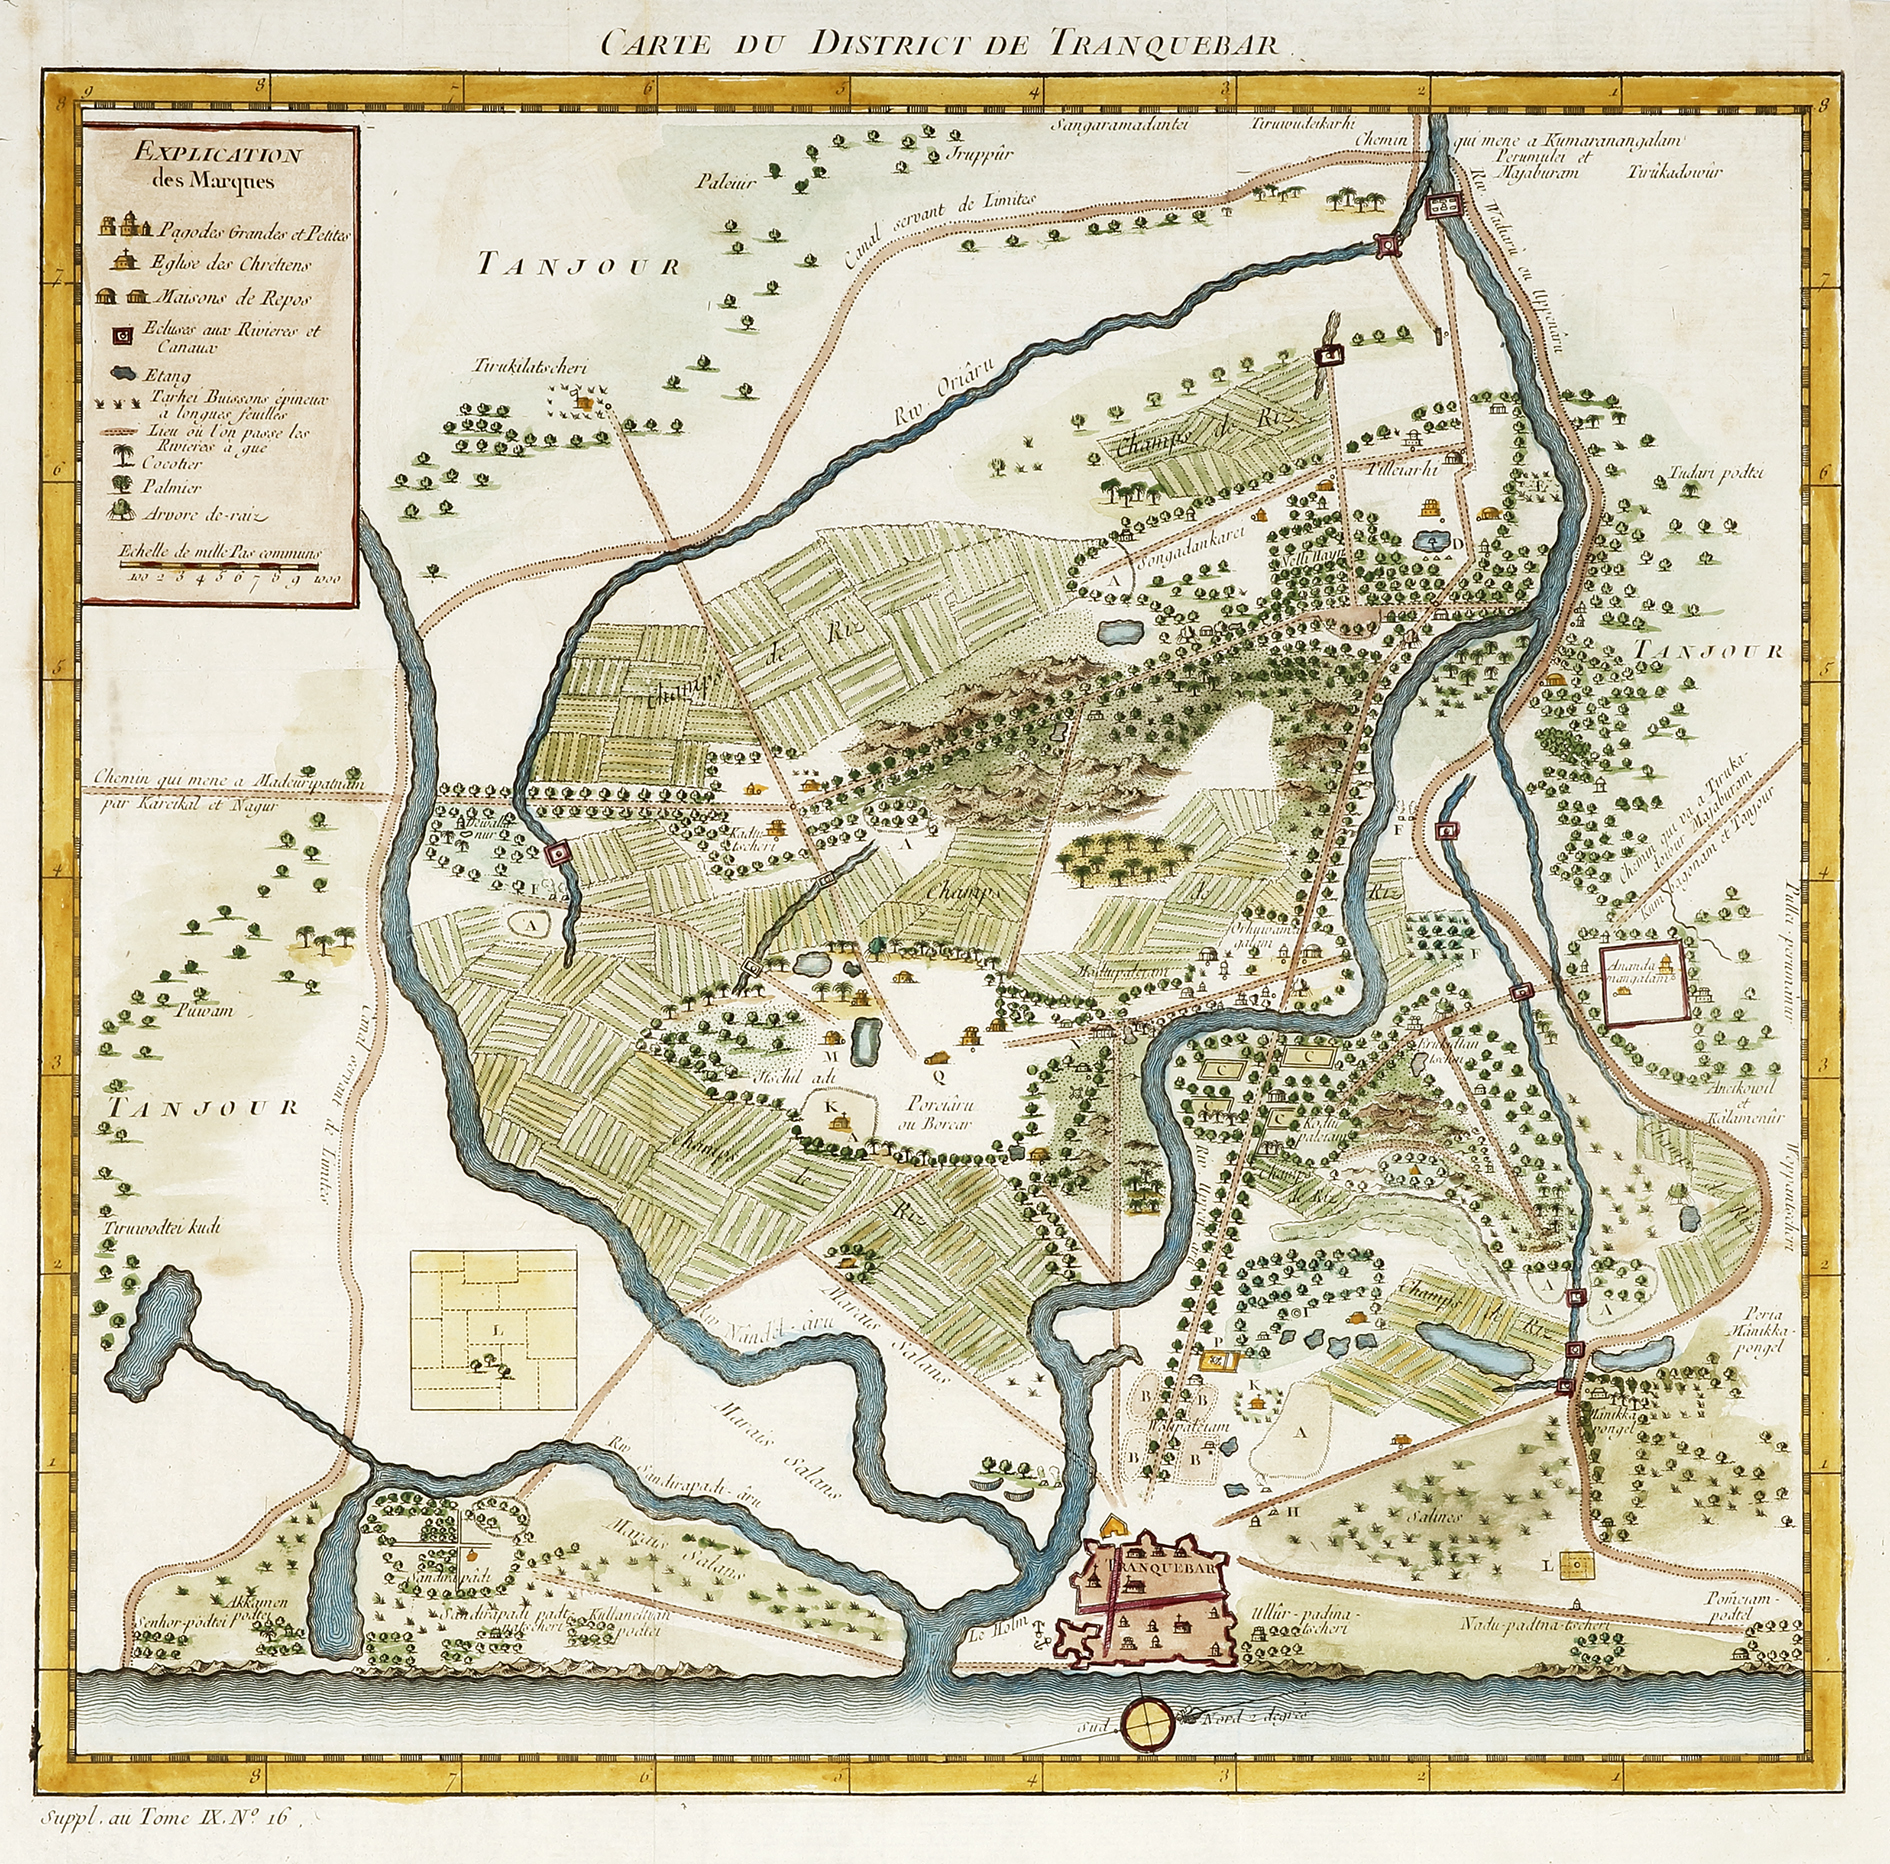 INDIA-Carte du District de Tranquebar. - Antique Map from 1764